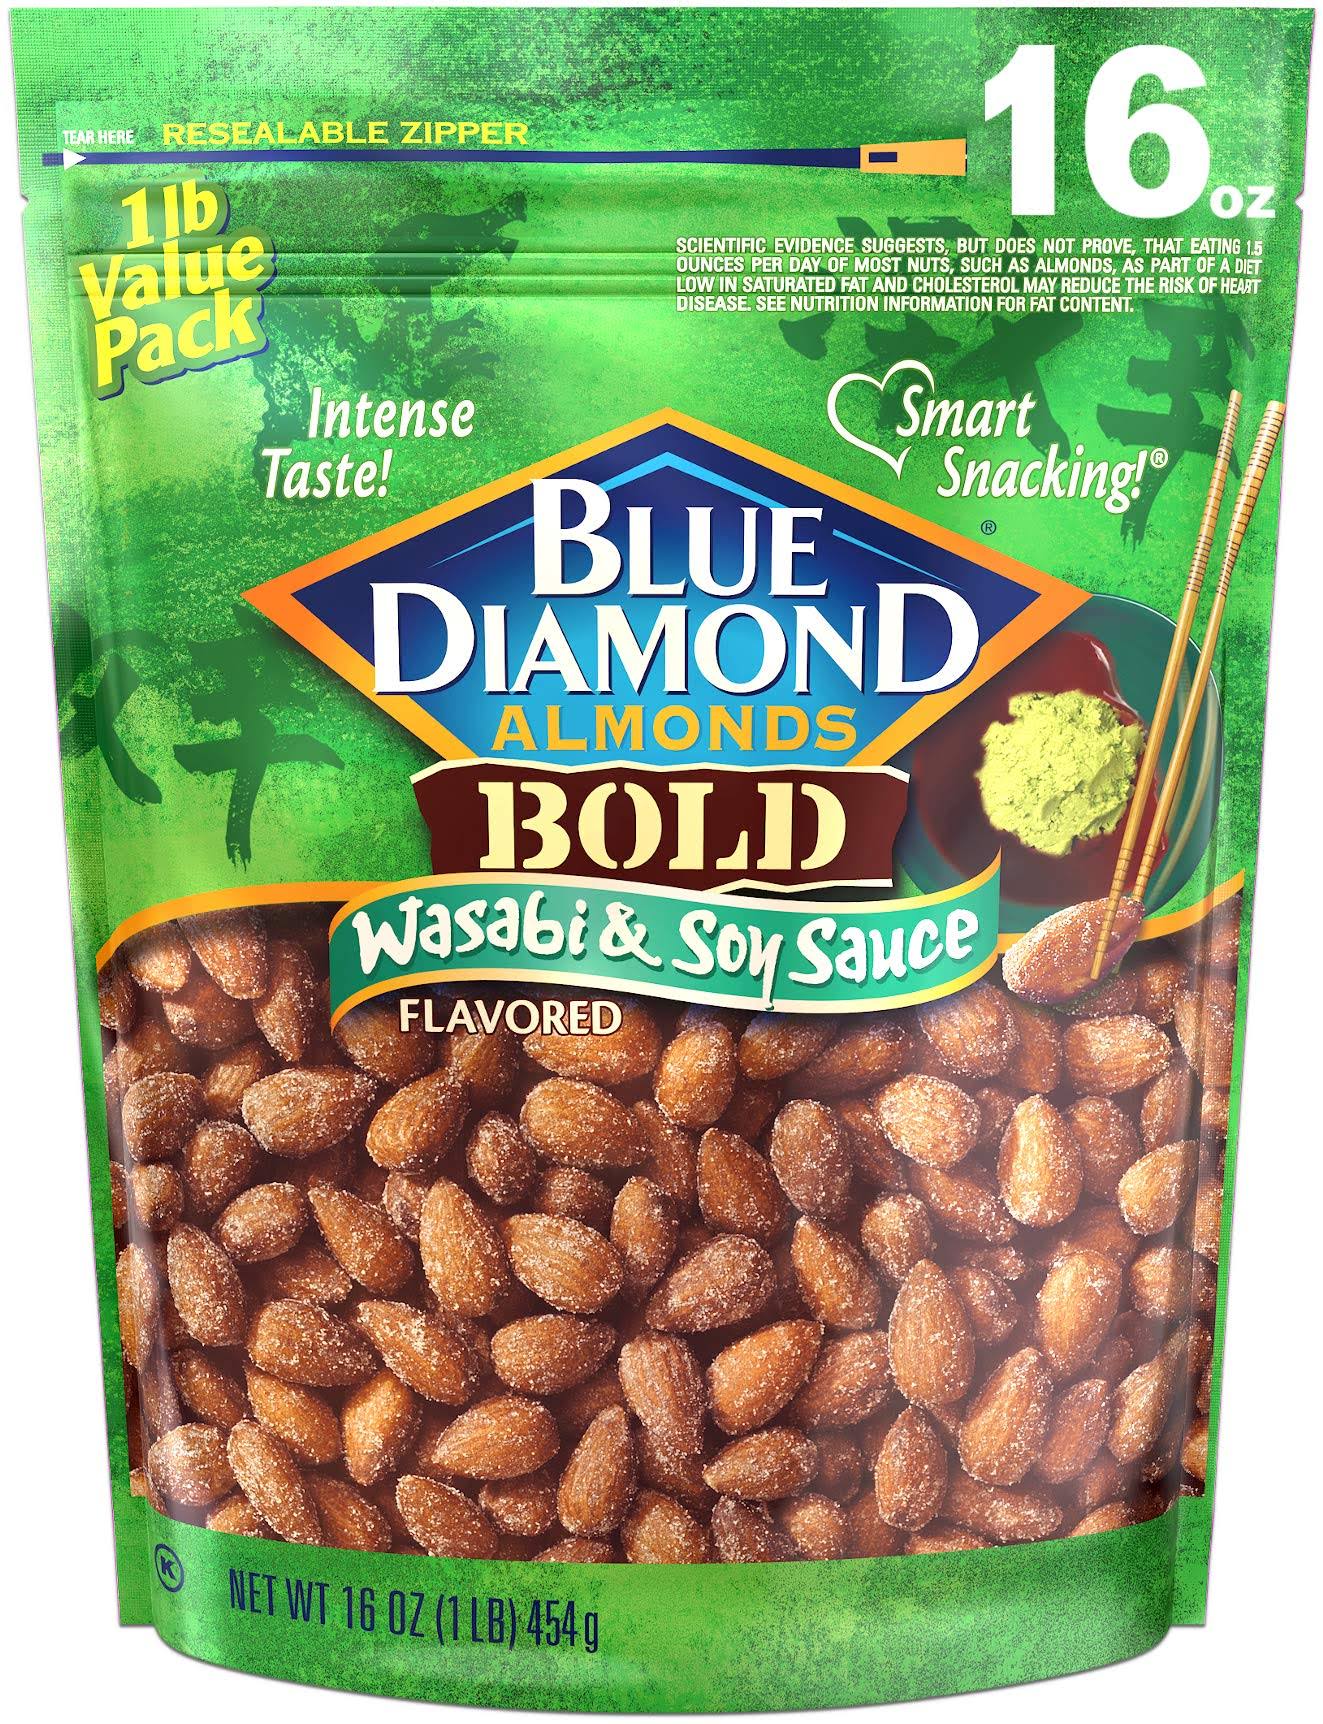 Blue Diamond Almonds Bold Wasabi and Soy Sauce - 16oz